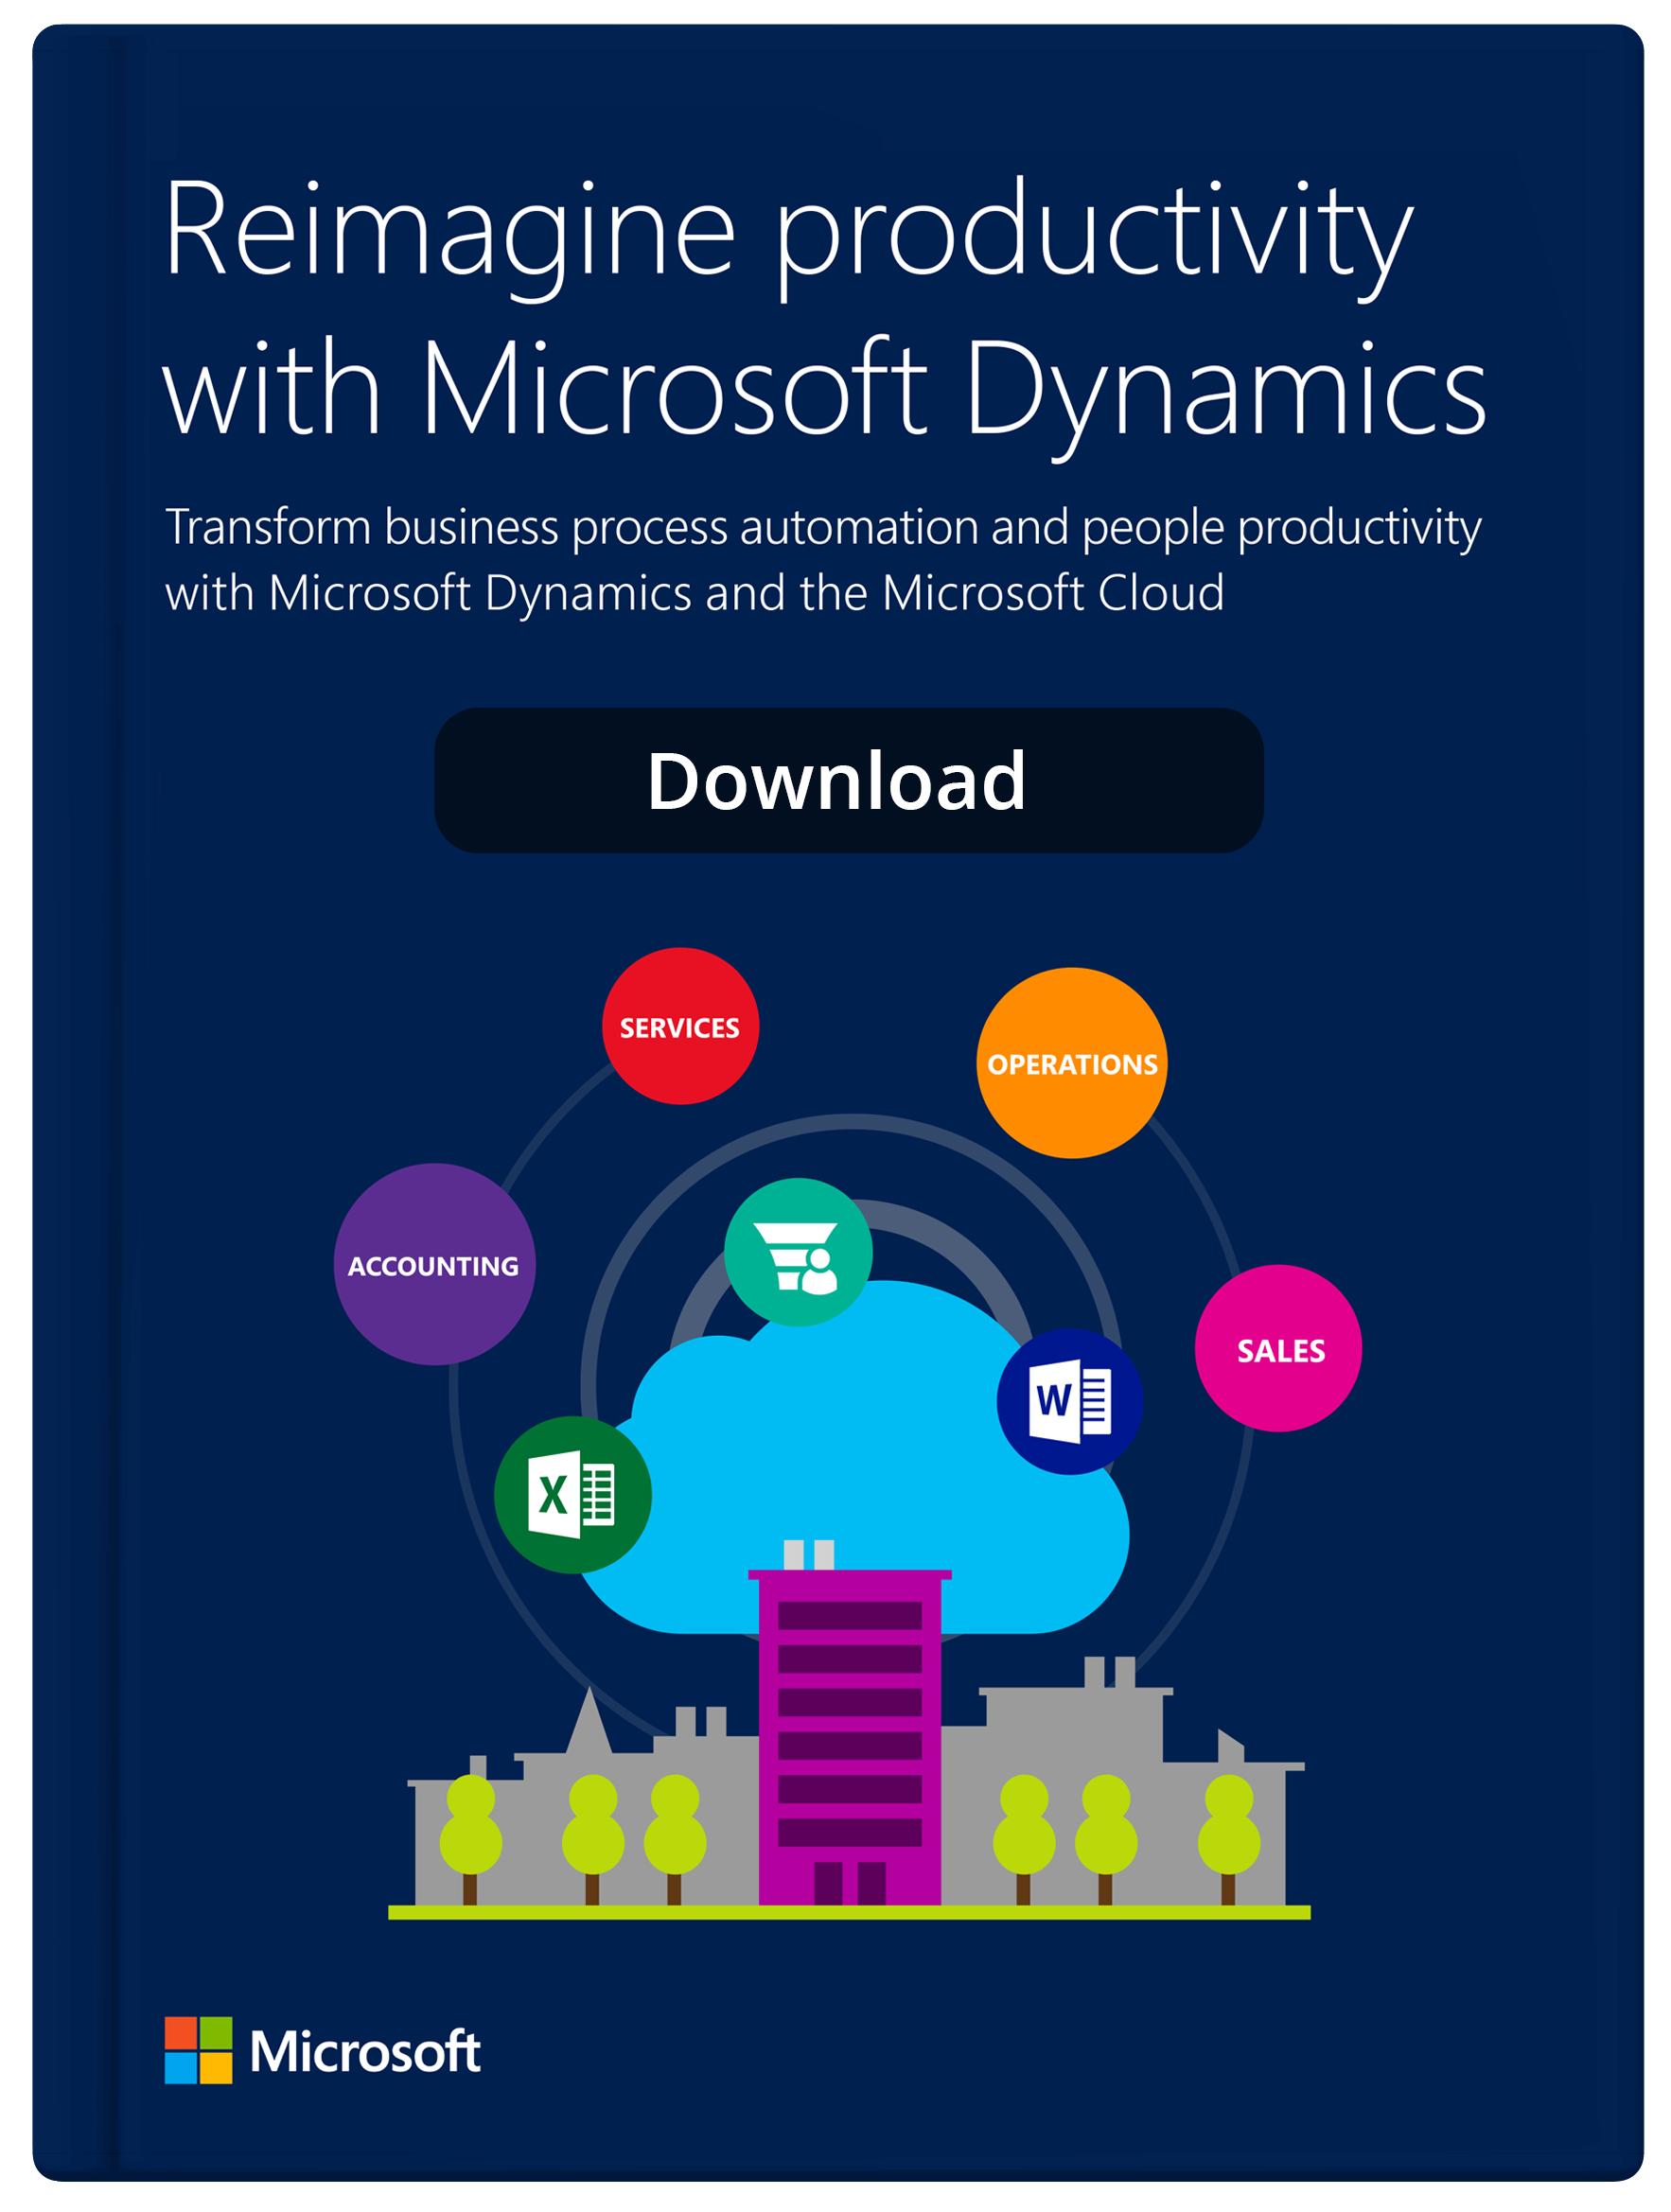 Reimagine Productivity with Microsoft Dynamics